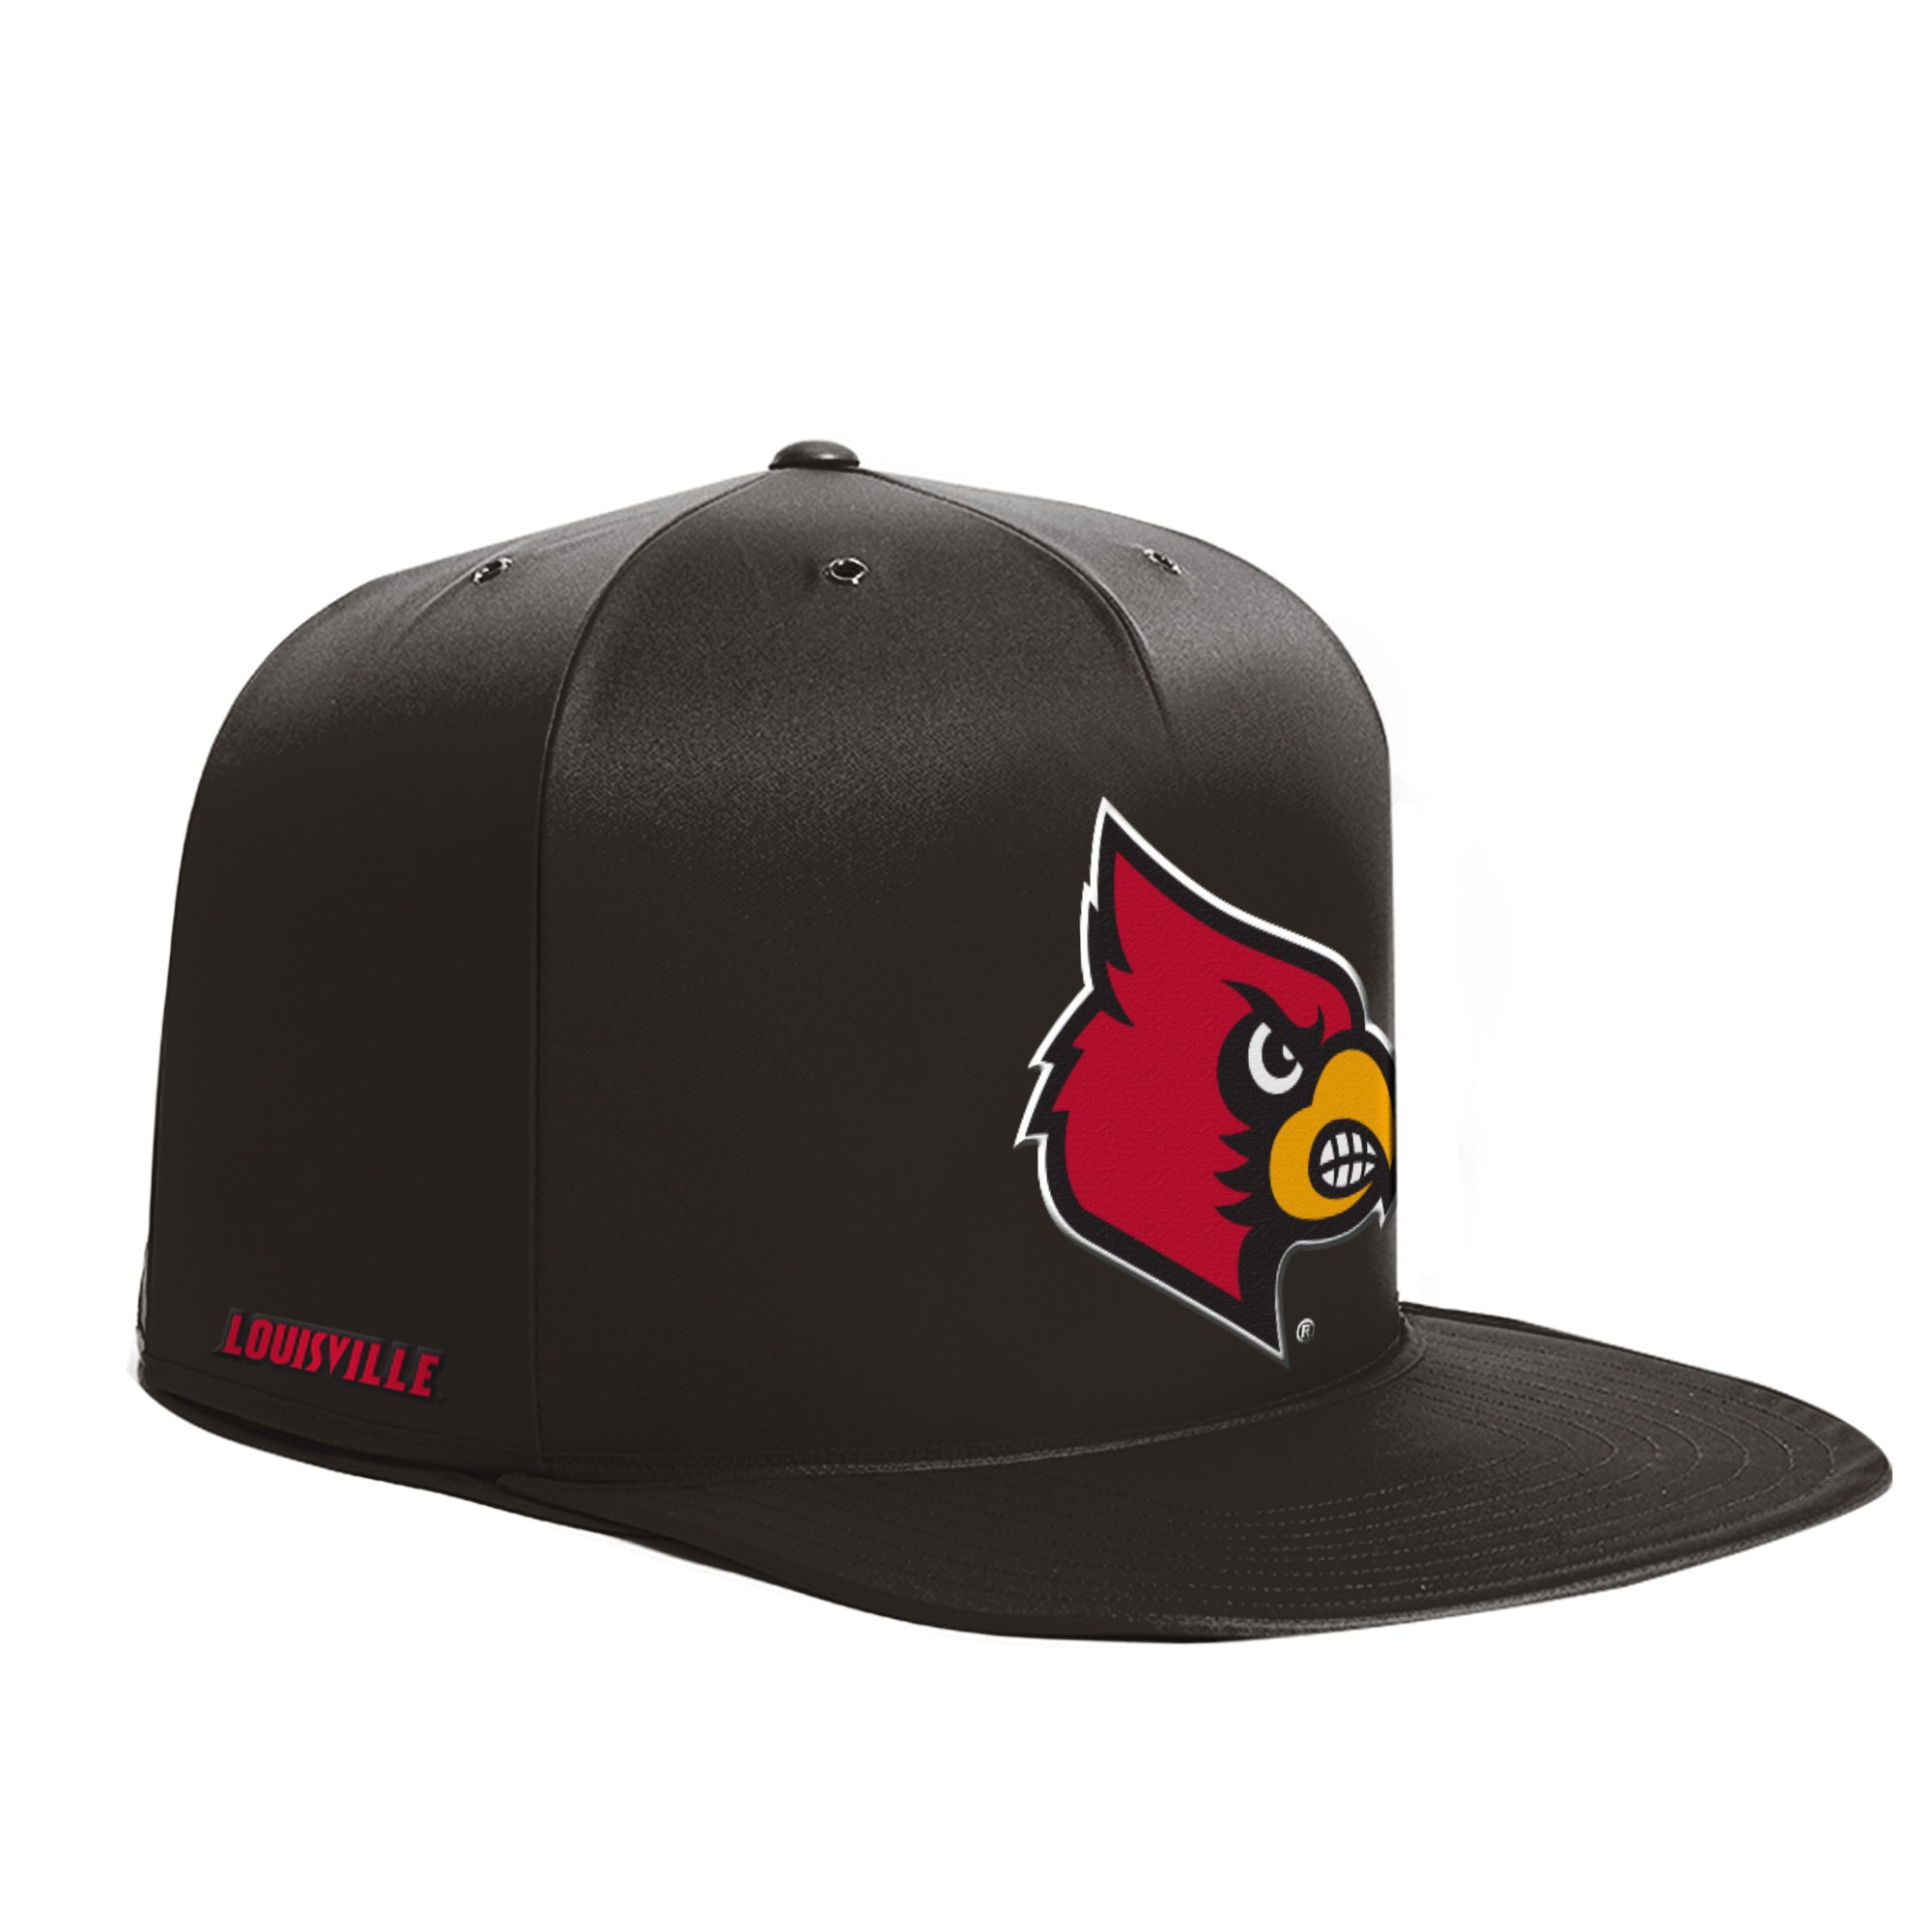 University of Louisville Hats, Louisville Cardinals Snapback, Baseball Cap